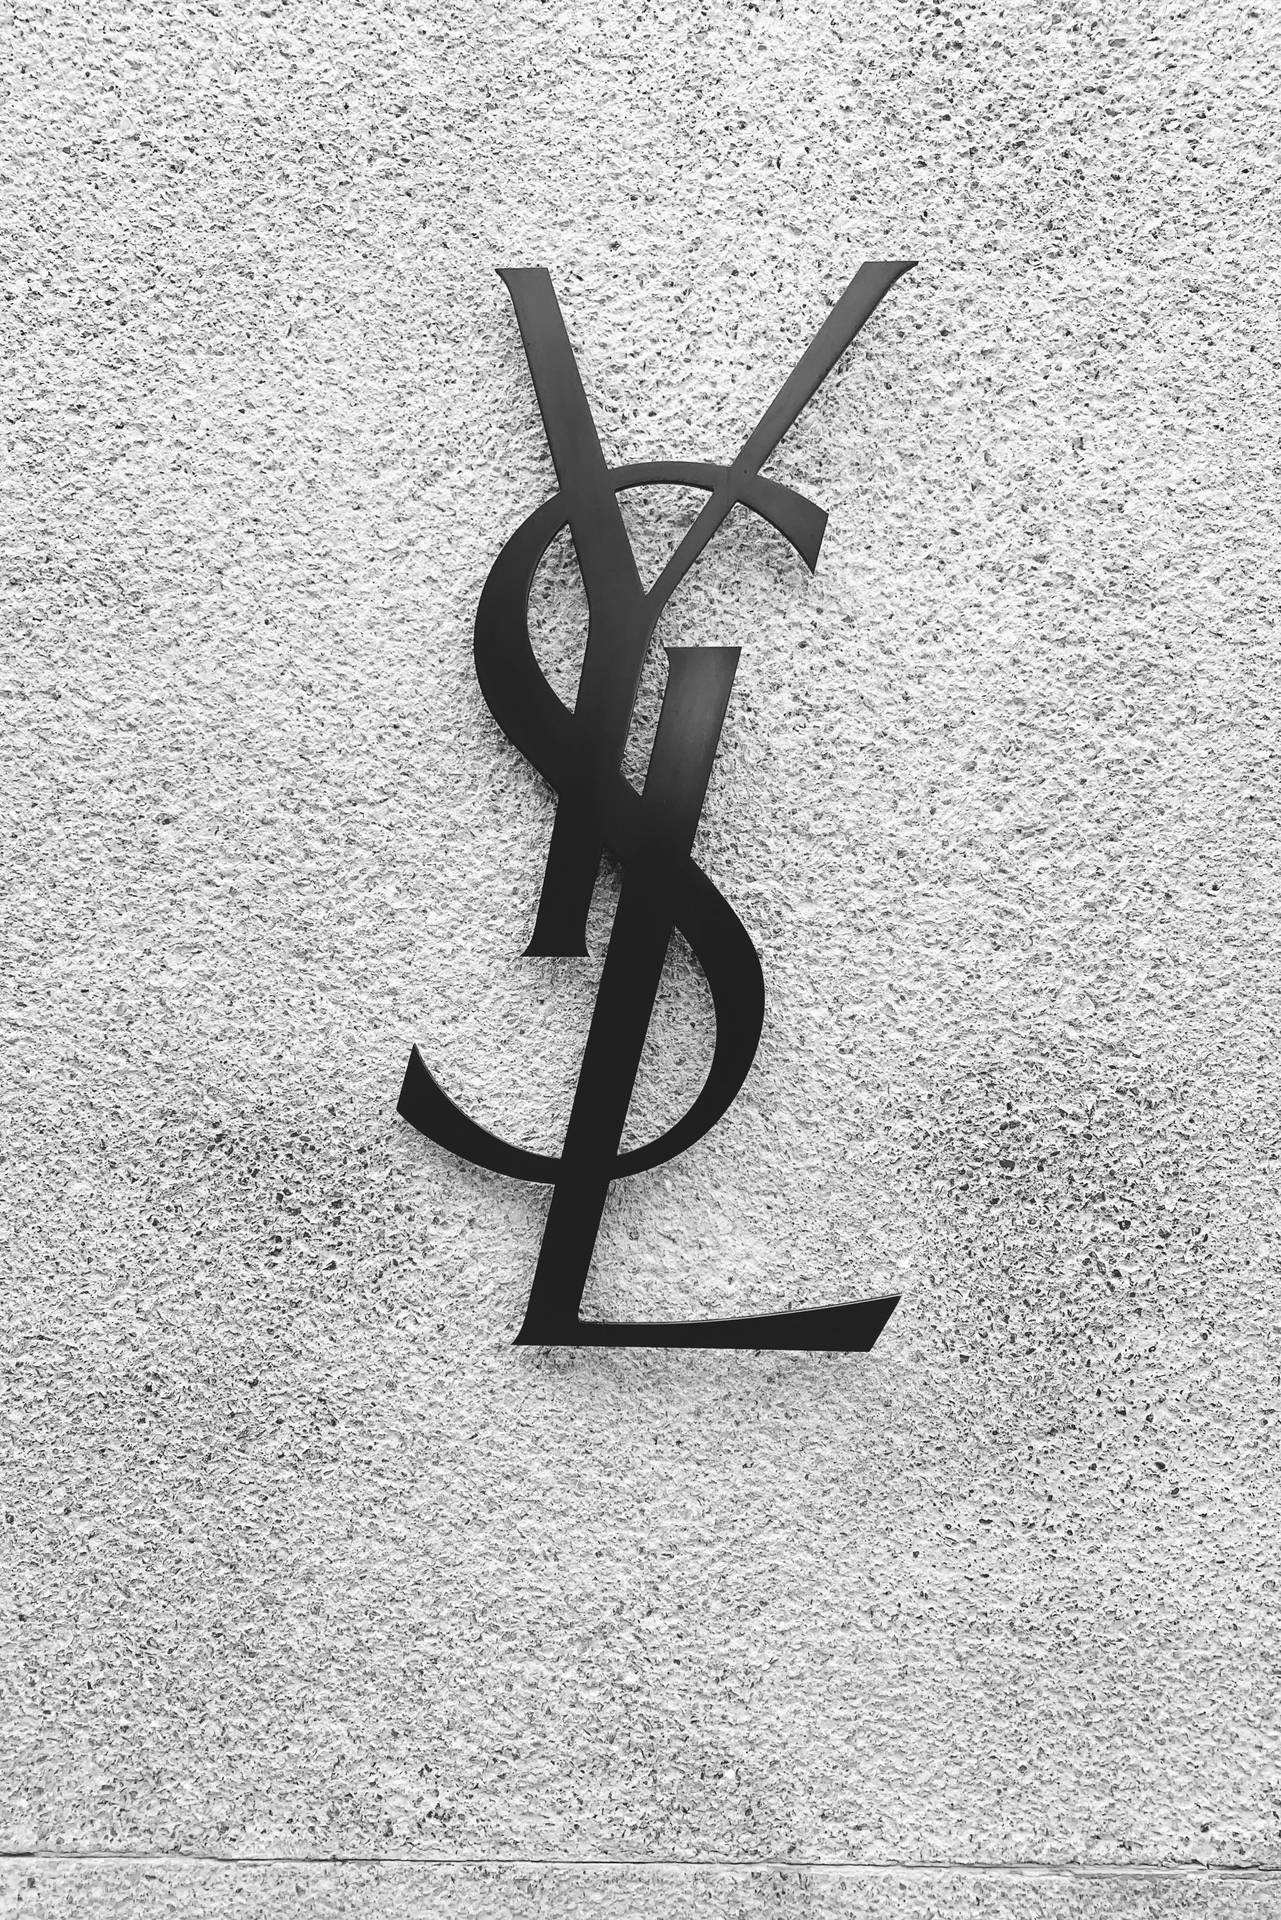 Download wallpapers Yves Saint Laurent carbon logo 4k grunge art carbon  background creative Yves Saint Laurent black logo brands Yves Saint  Laurent logo Yves Saint Laurent for desktop free Pictures for desktop